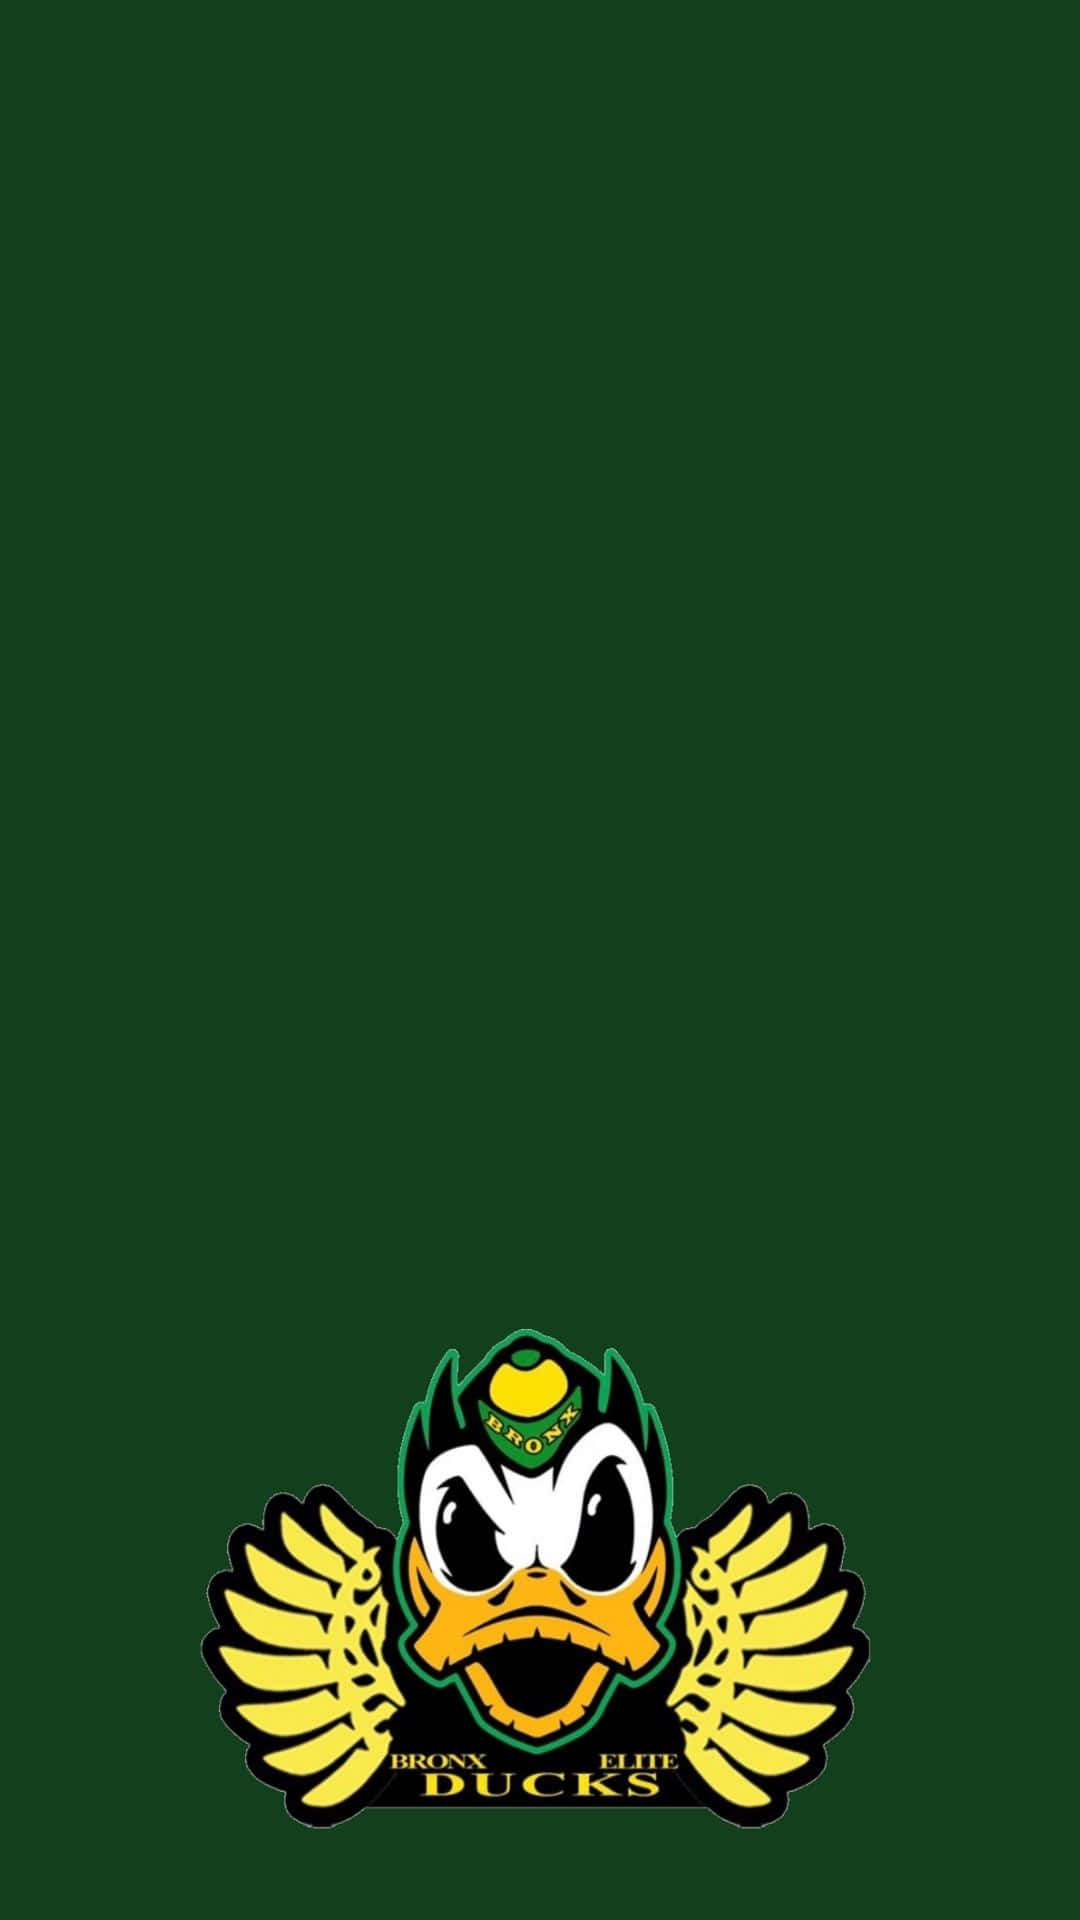 Just a Simple Ducks iPhone 6 Wallpaper I created  rducks